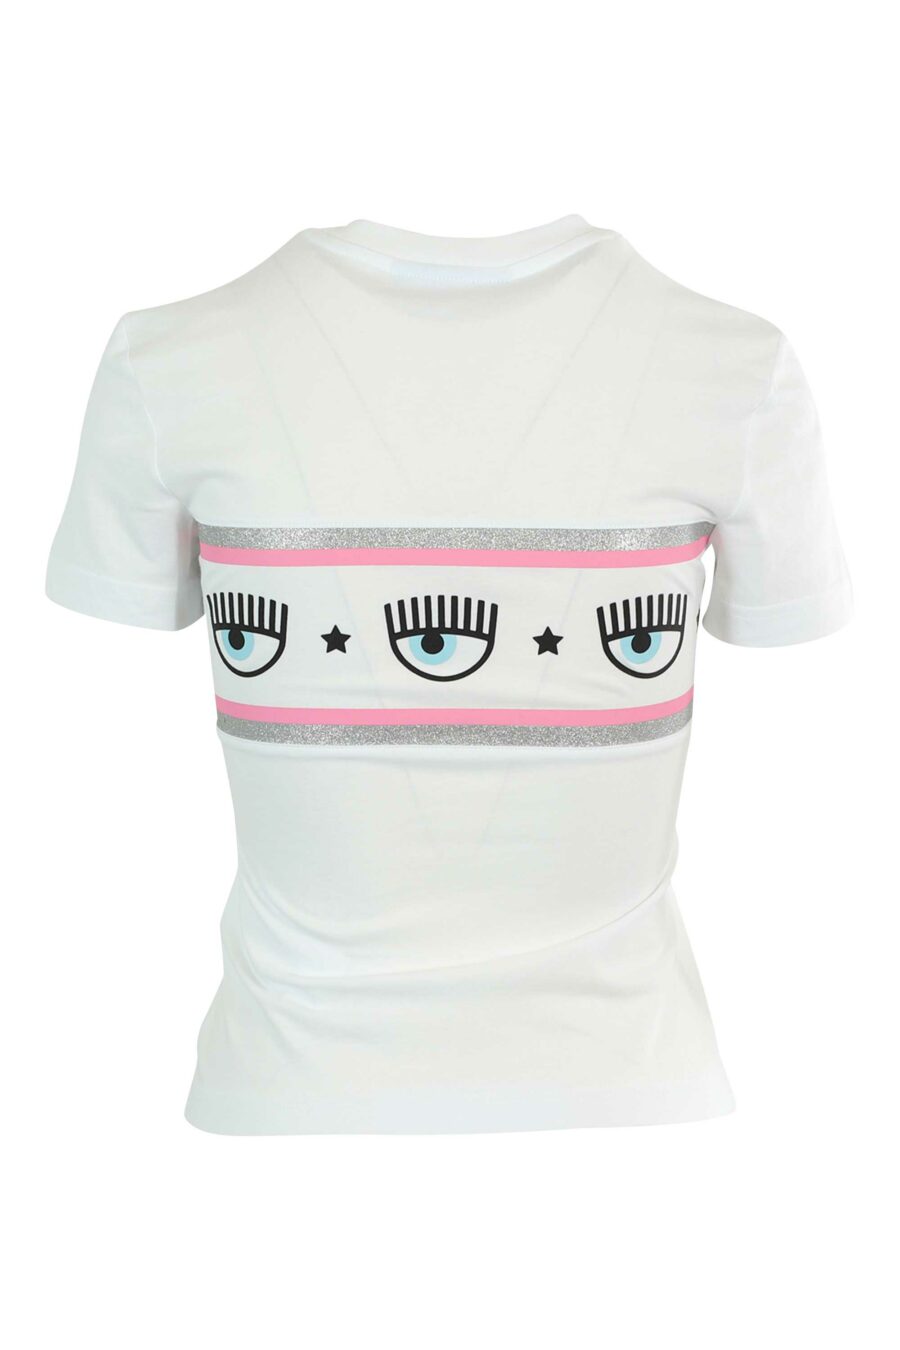 White T-shirt with eye logo on ribbon - 8052672419835 2